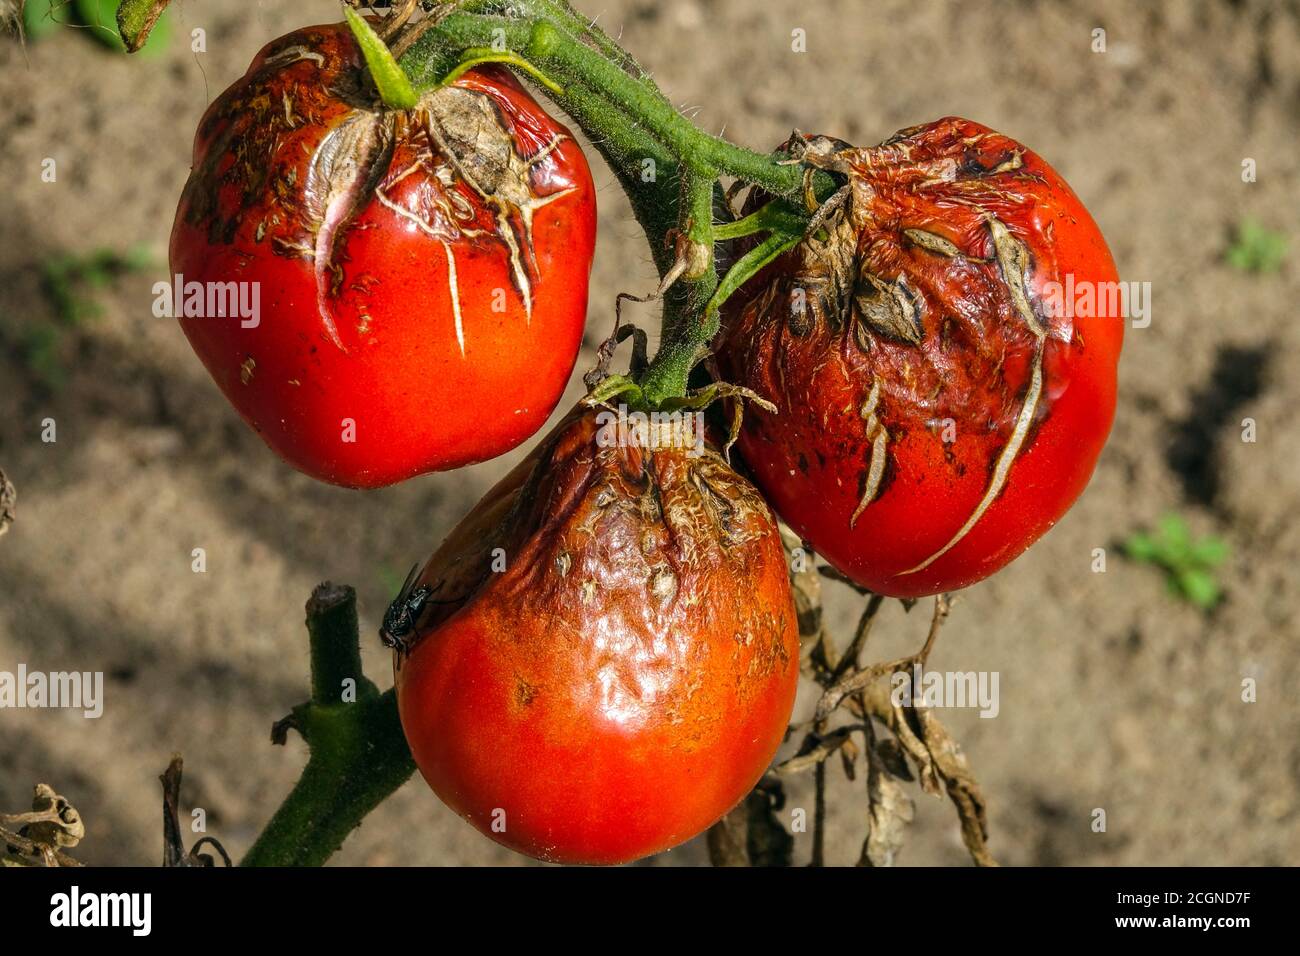 Blight tomato disease blight Phytophthora infestans mildew rotting fruits Tomato plant tomato blight Tomatoes Solanum lycopersicum Fungi Mildews Stock Photo